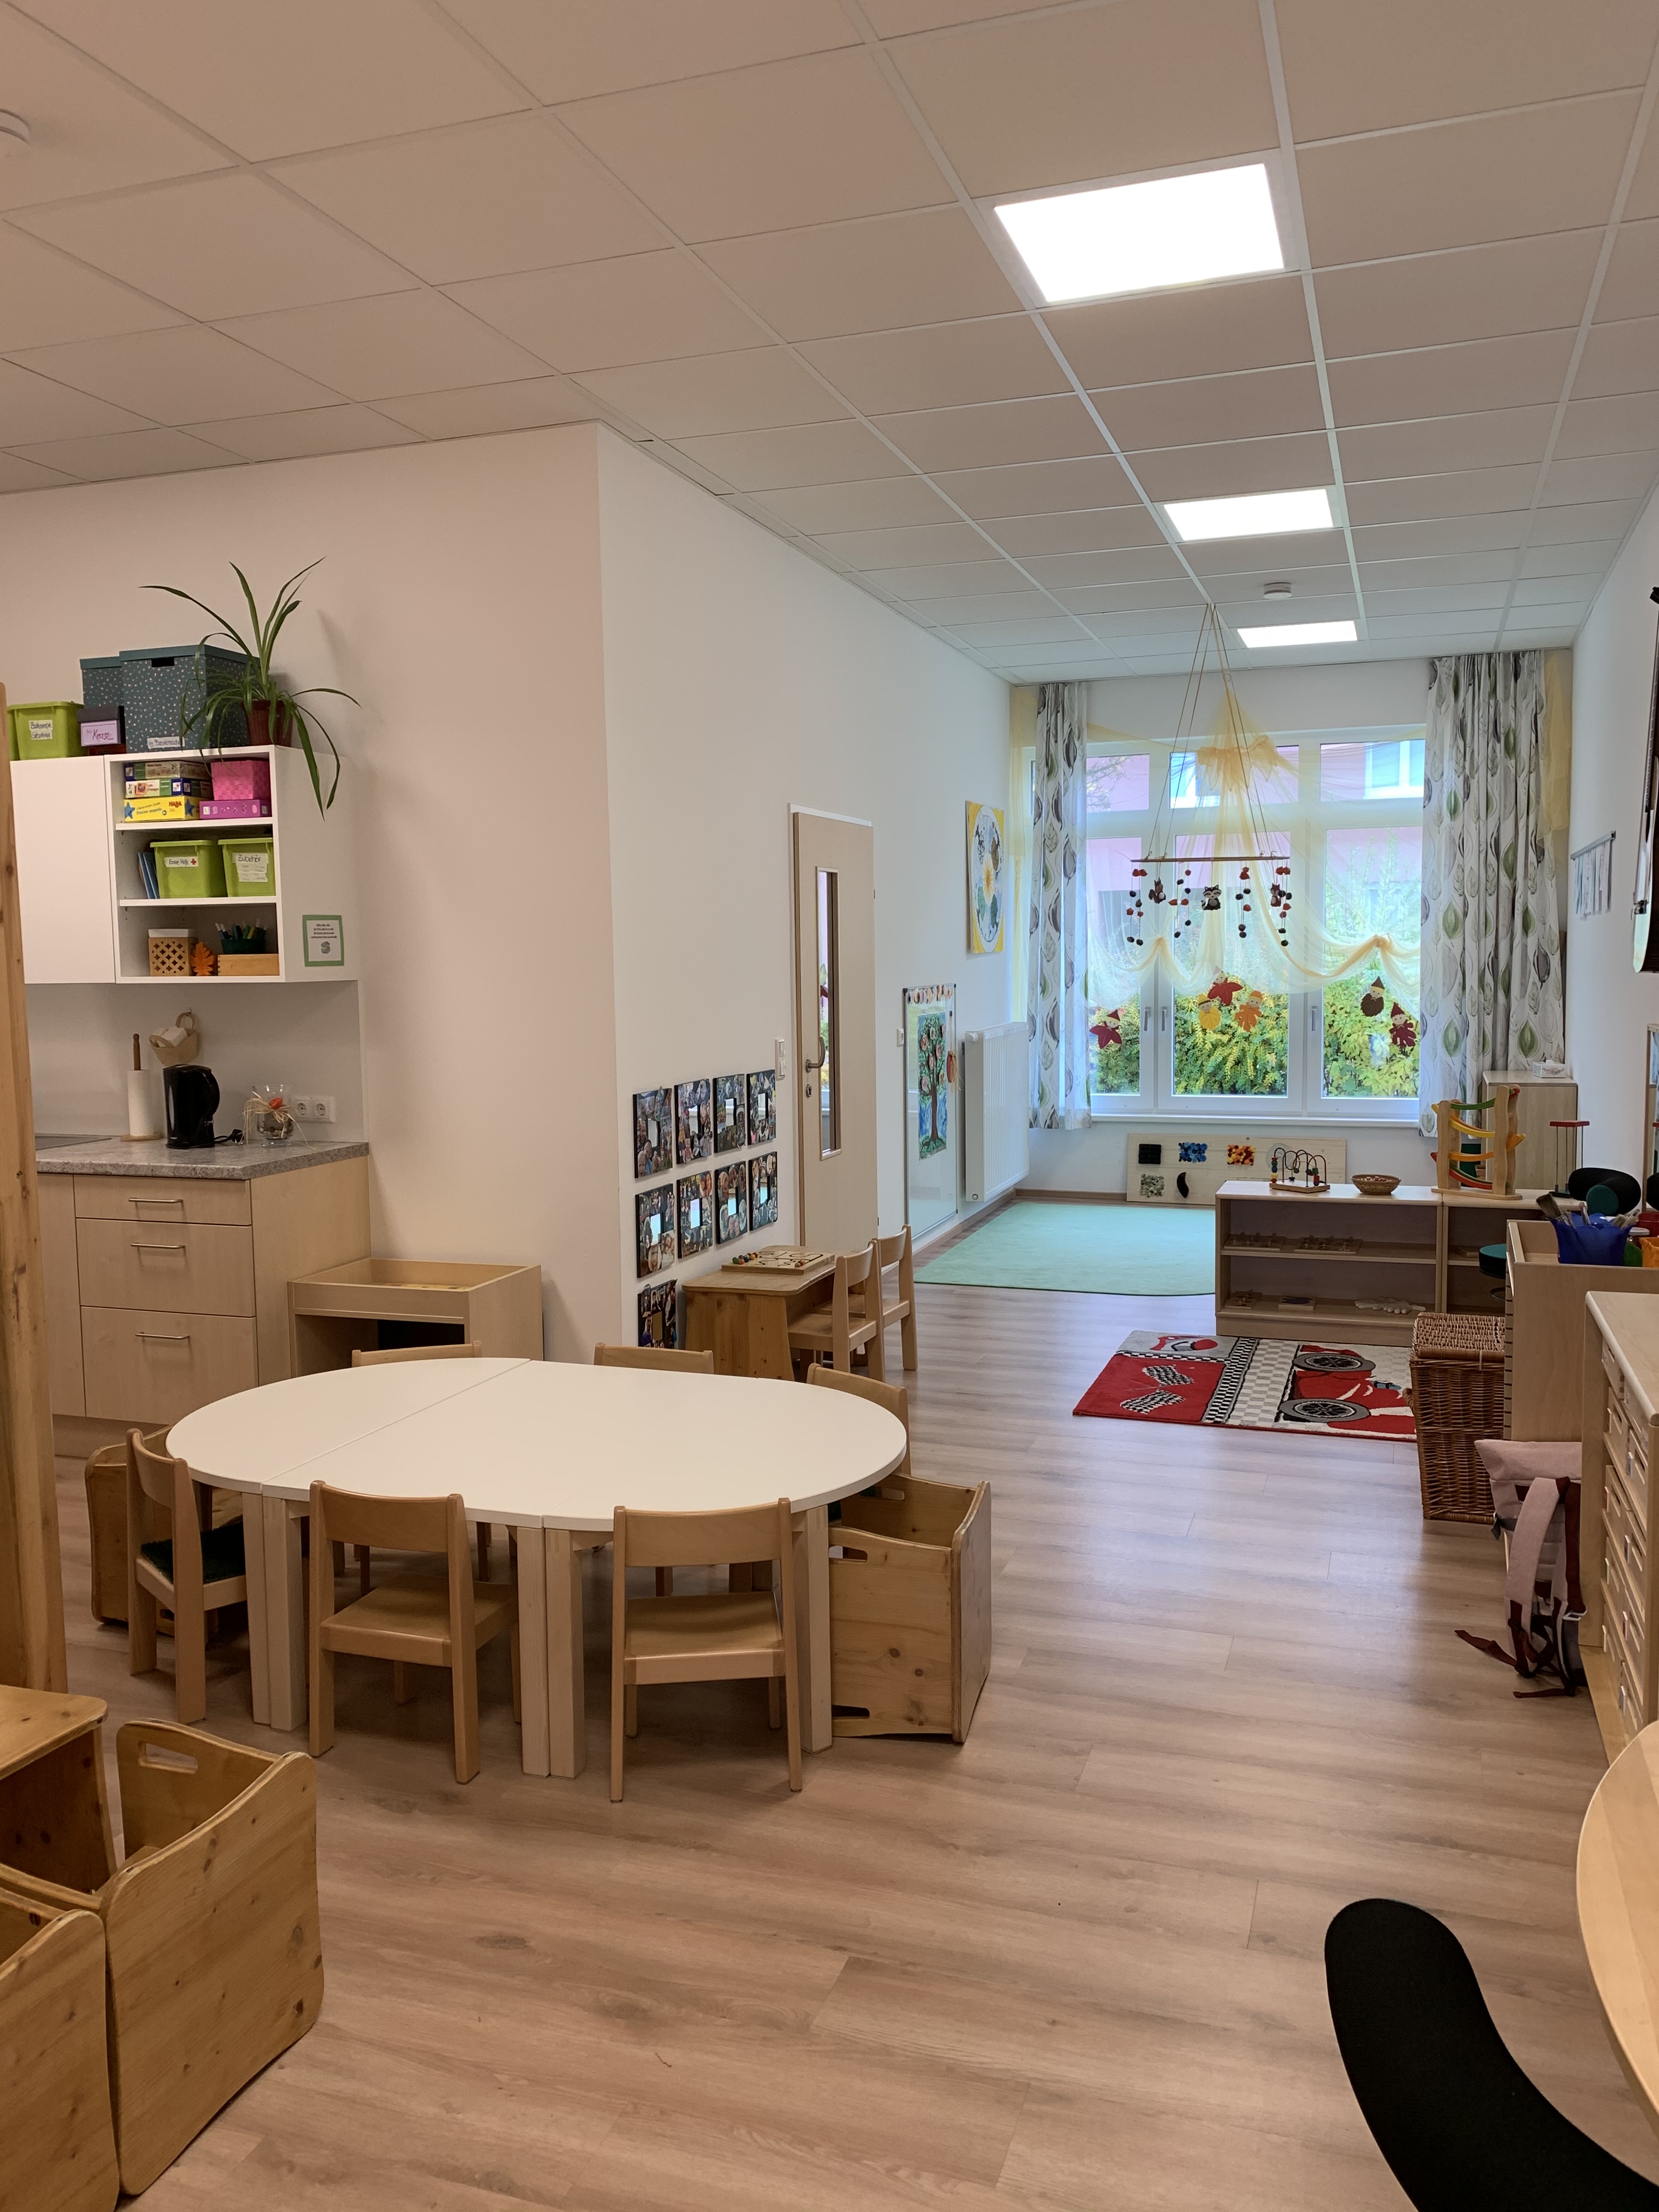 Krabbelgruppe „Apfelbäumchen“ 2018/2019 im Kindergarten St. Florian am Inn